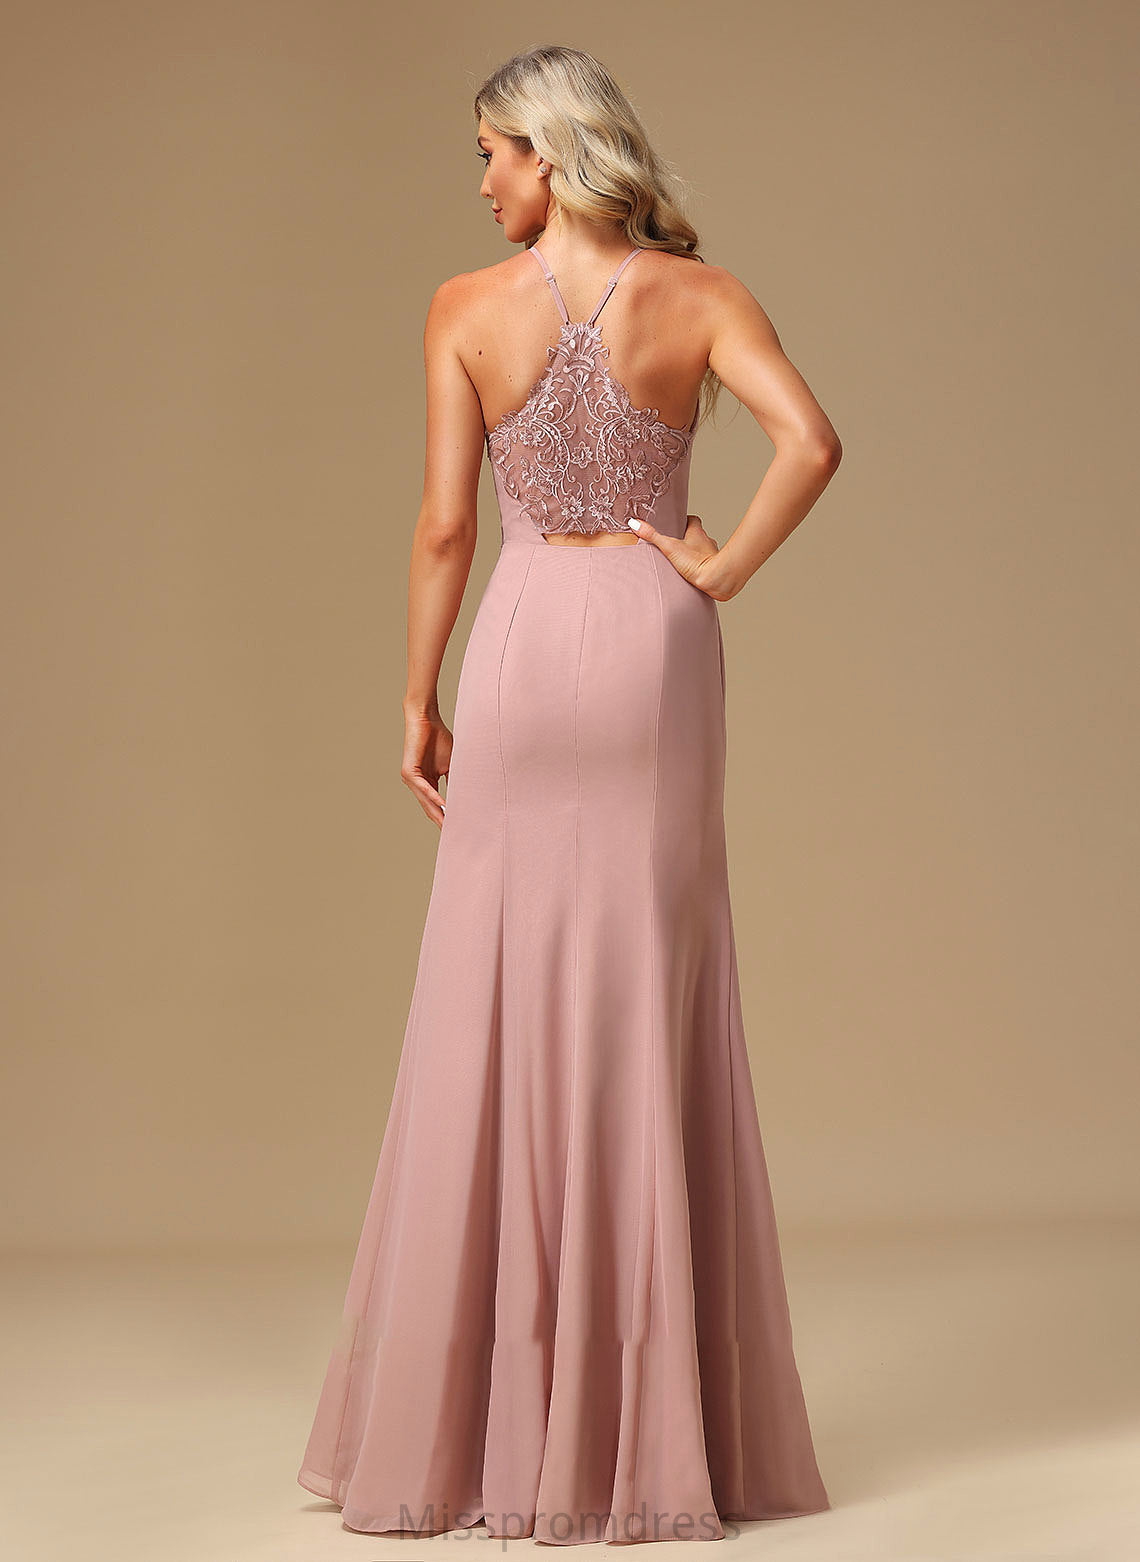 Lace Neckline Fabric Silhouette Floor-Length Length SplitFront Embellishment A-Line HighNeck Julianna High Low Bridesmaid Dresses